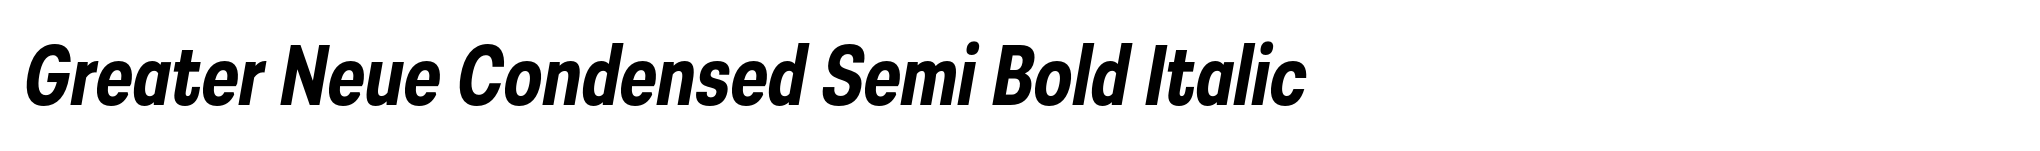 Greater Neue Condensed Semi Bold Italic image